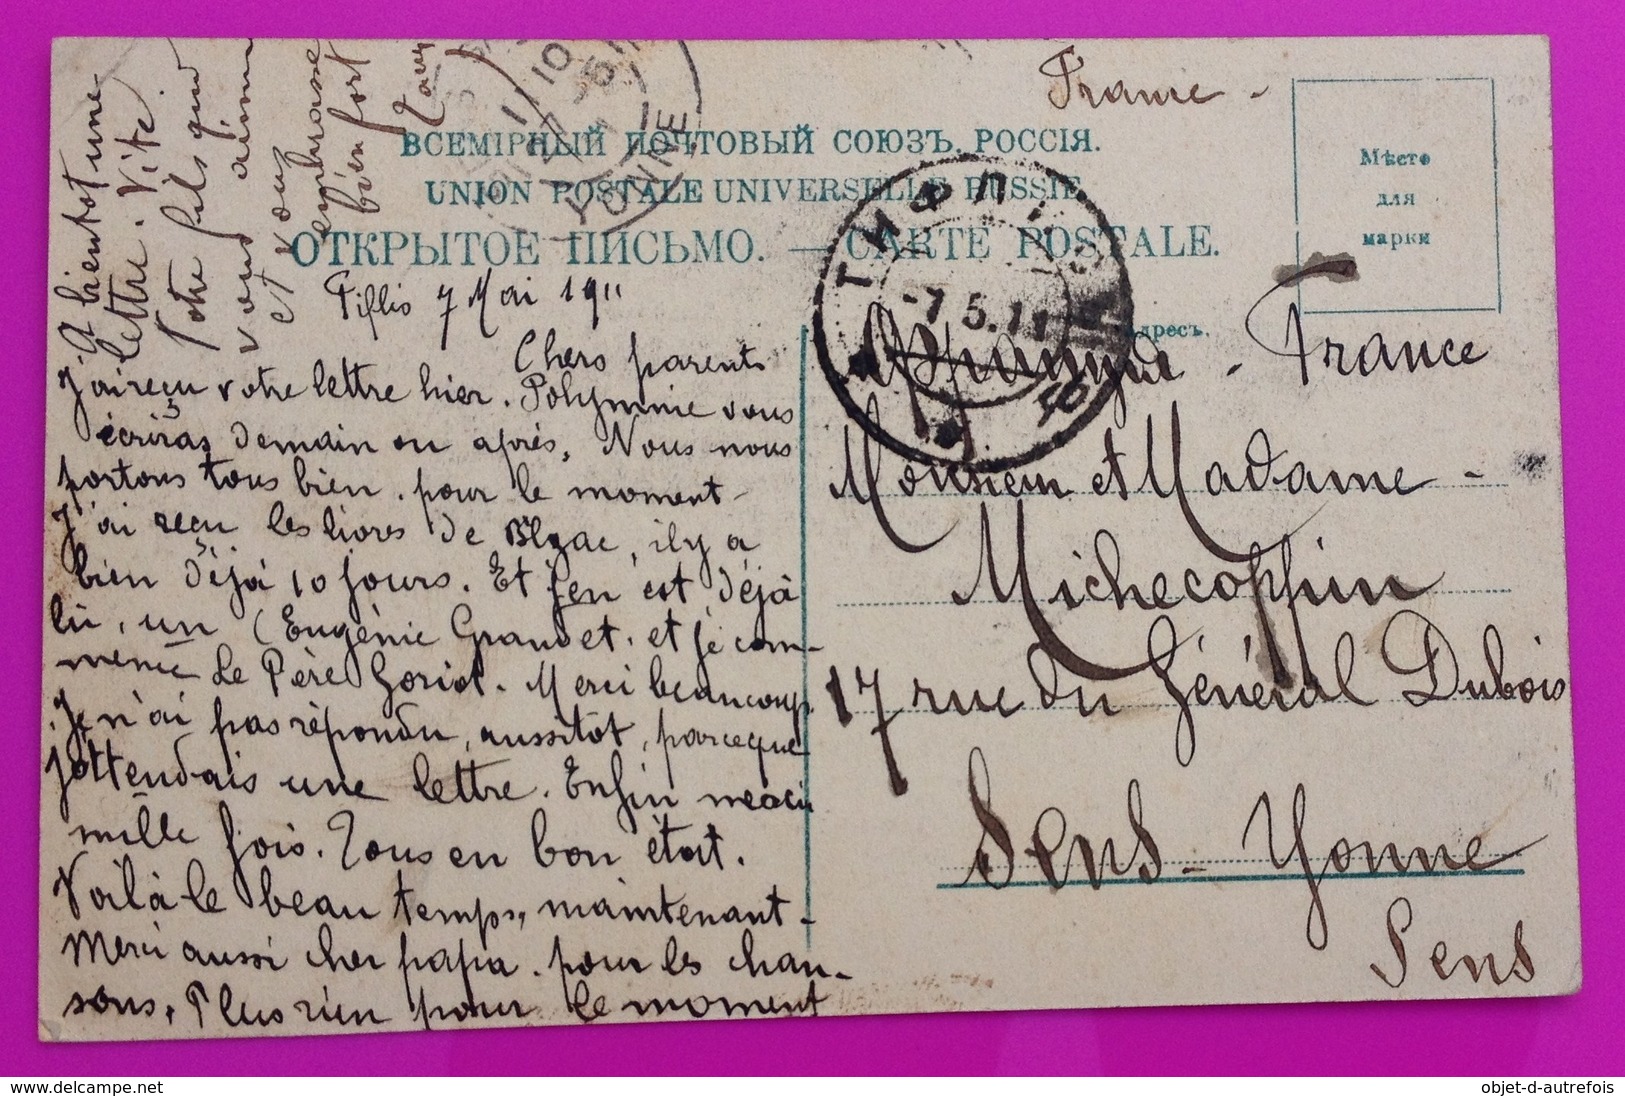 Cpa Tiflis Gare Georgie Russie Tbilissi Carte Postale 1911 Rare - Russland